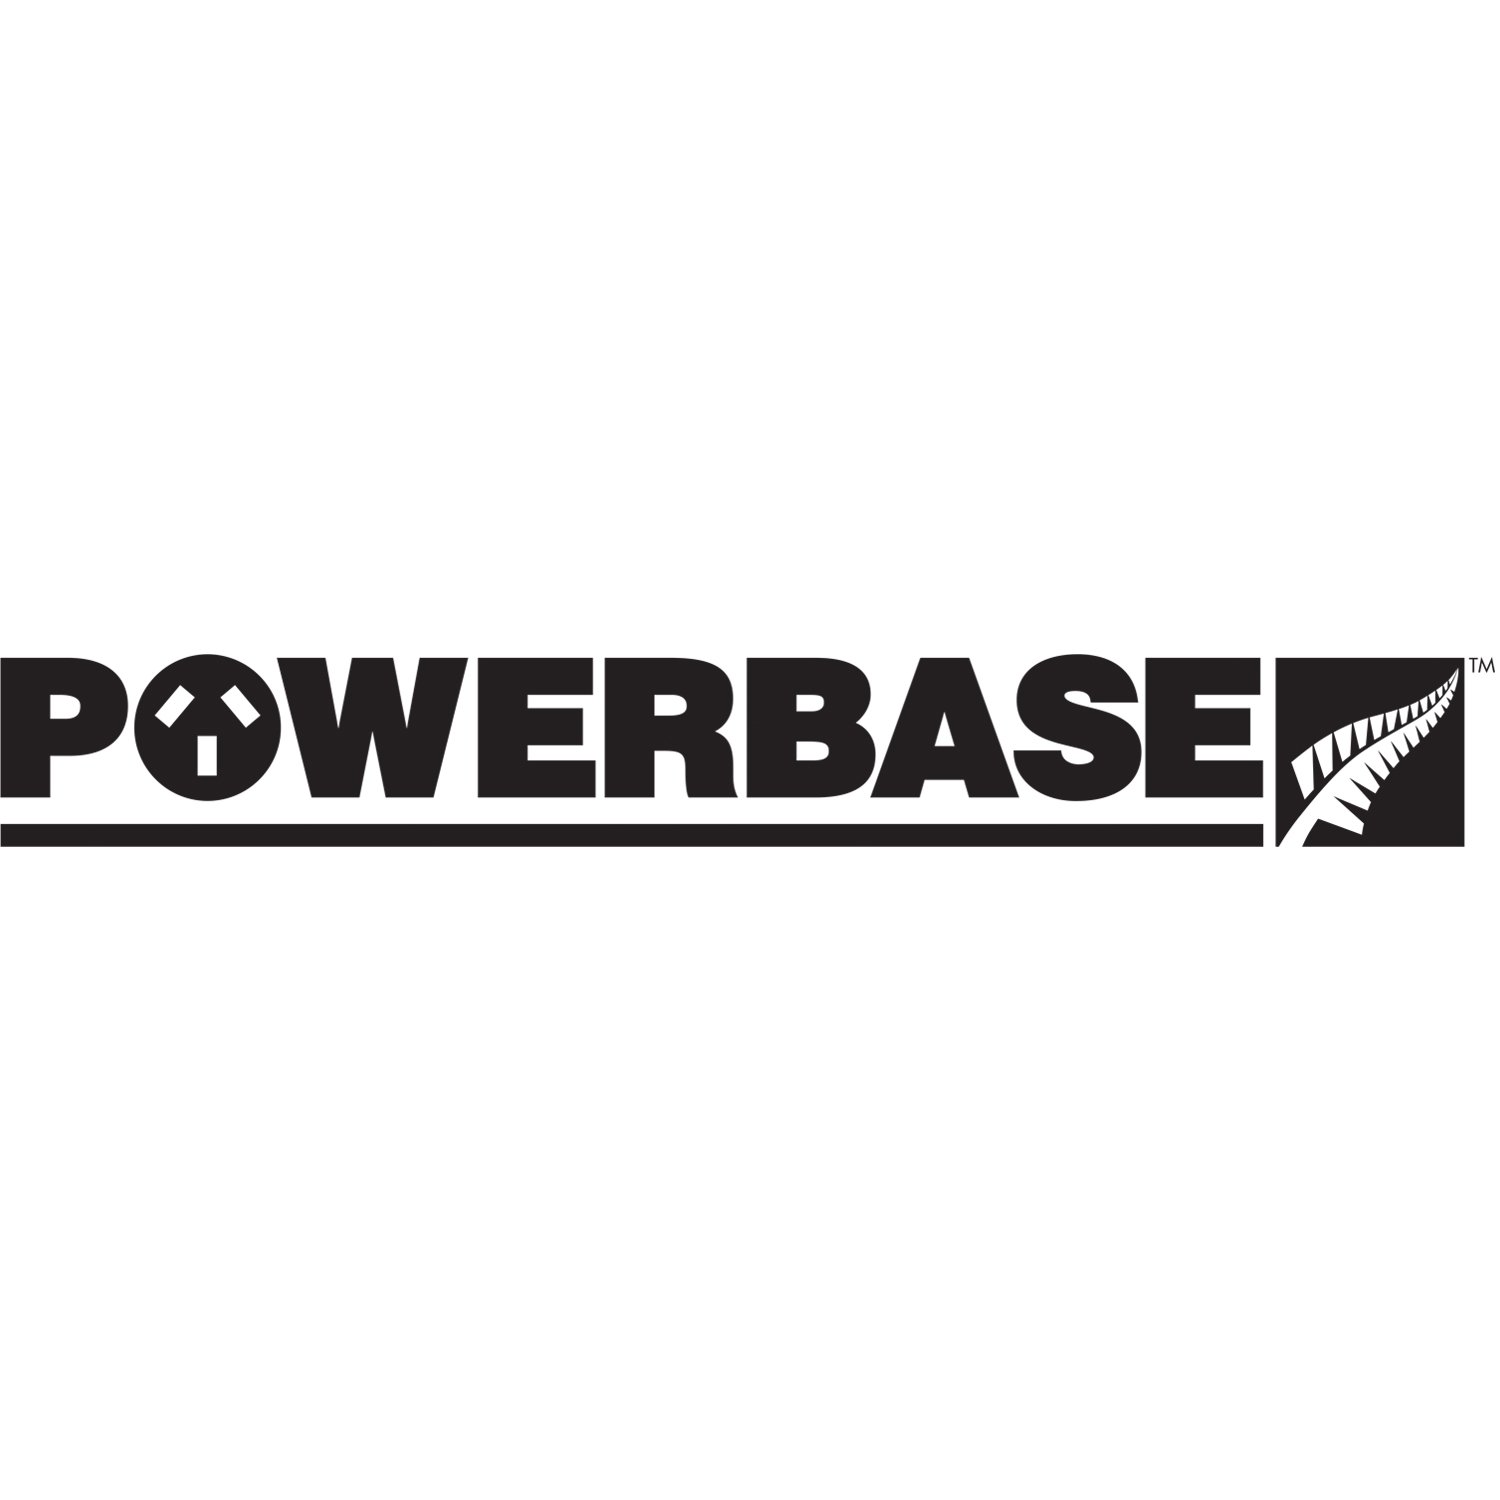 Powerbase_logo.jpg